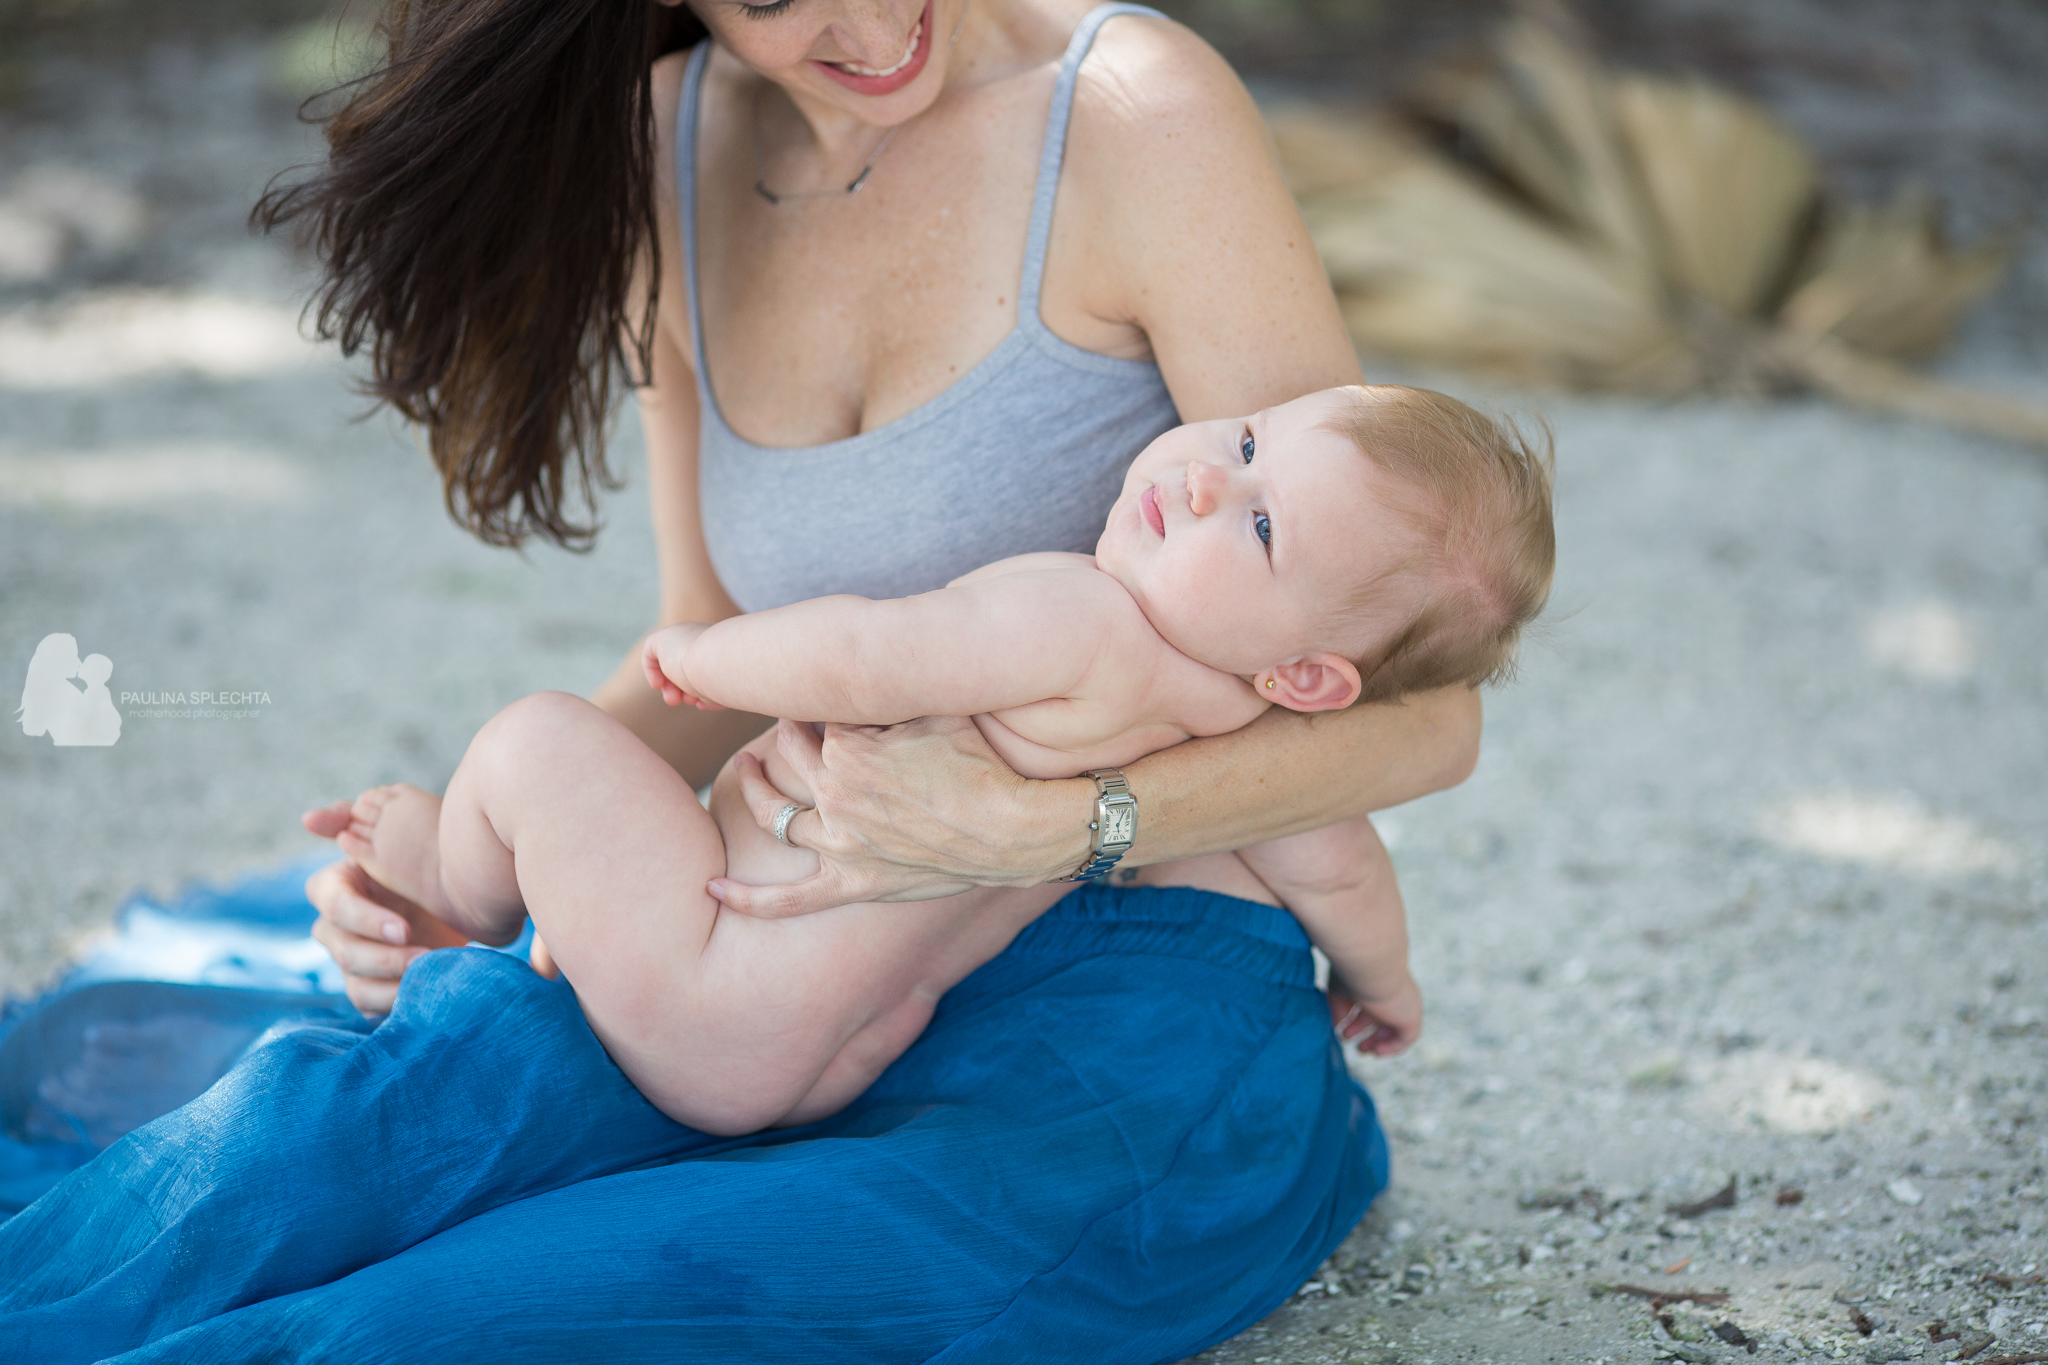 birth-photographer-breastfeeding-family-child-newborn-cake-smash-pregnancy-maternity-13.jpg